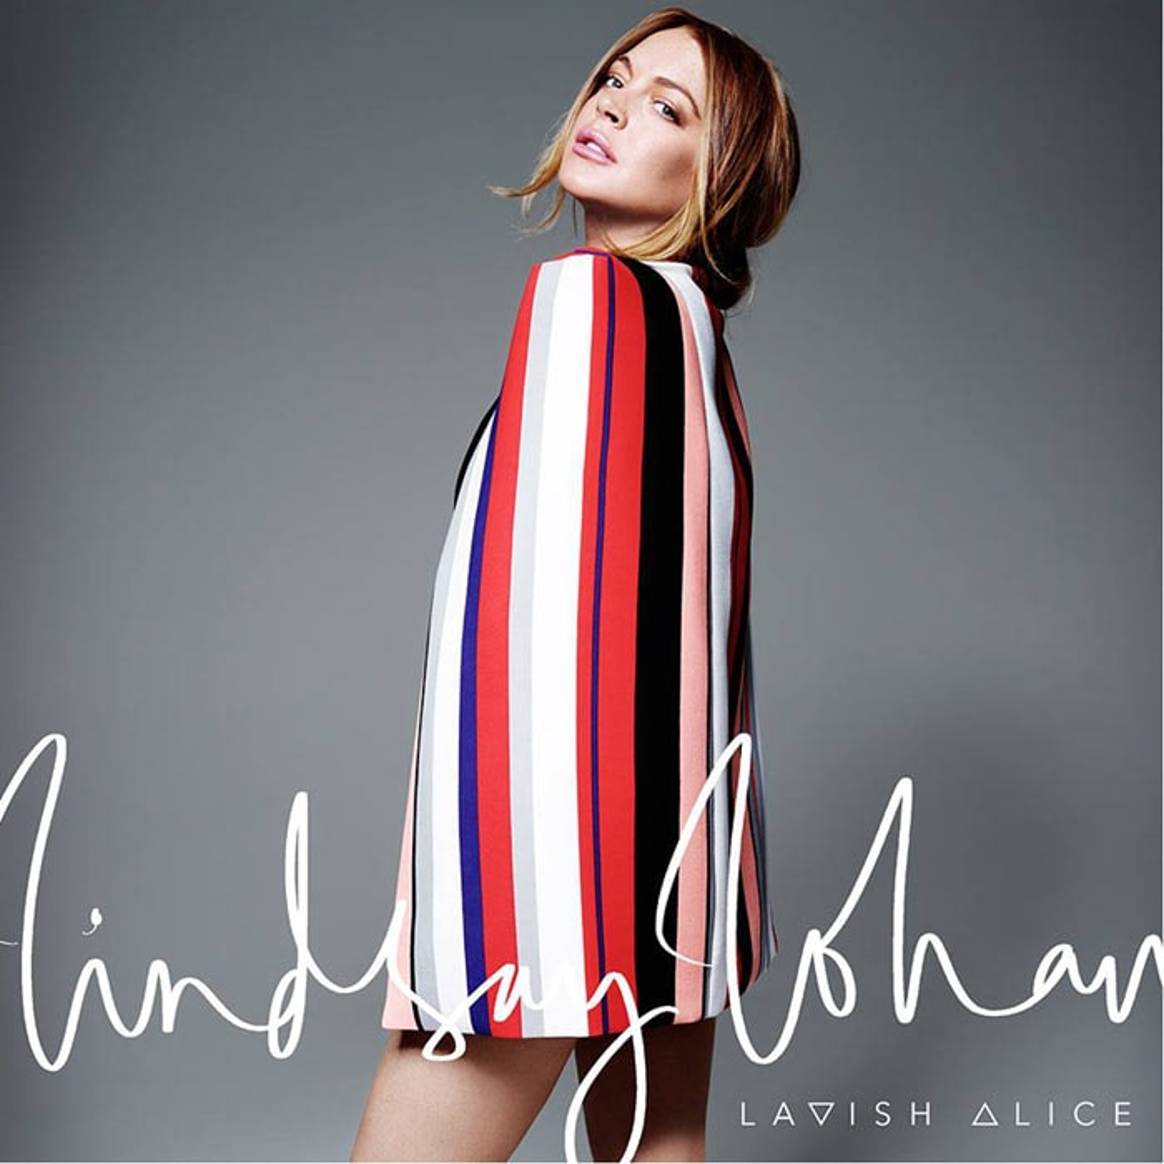 Lavish Alice collaborating with Lindsay Lohan